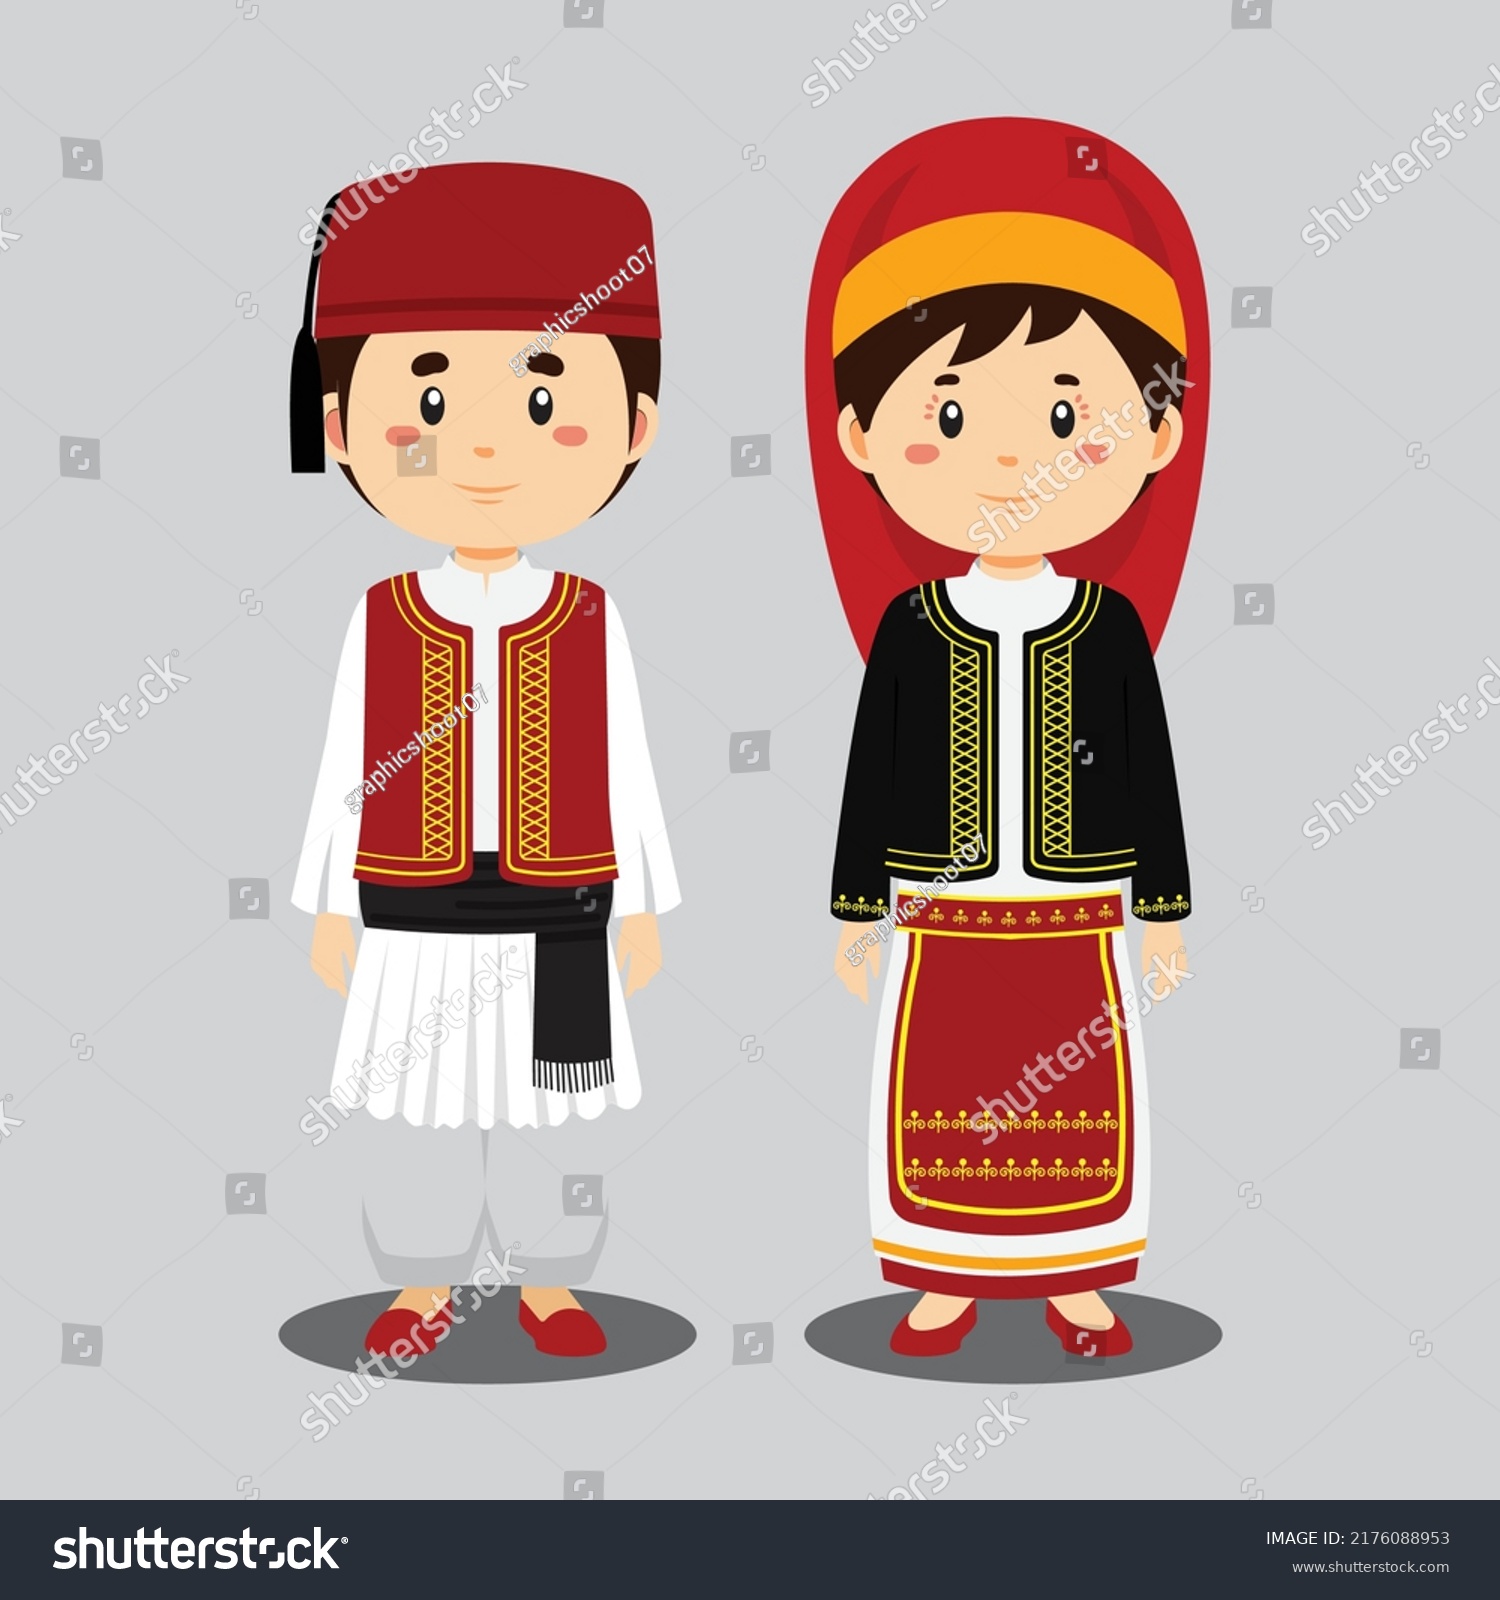 8,056 Turkish couple Images, Stock Photos & Vectors | Shutterstock